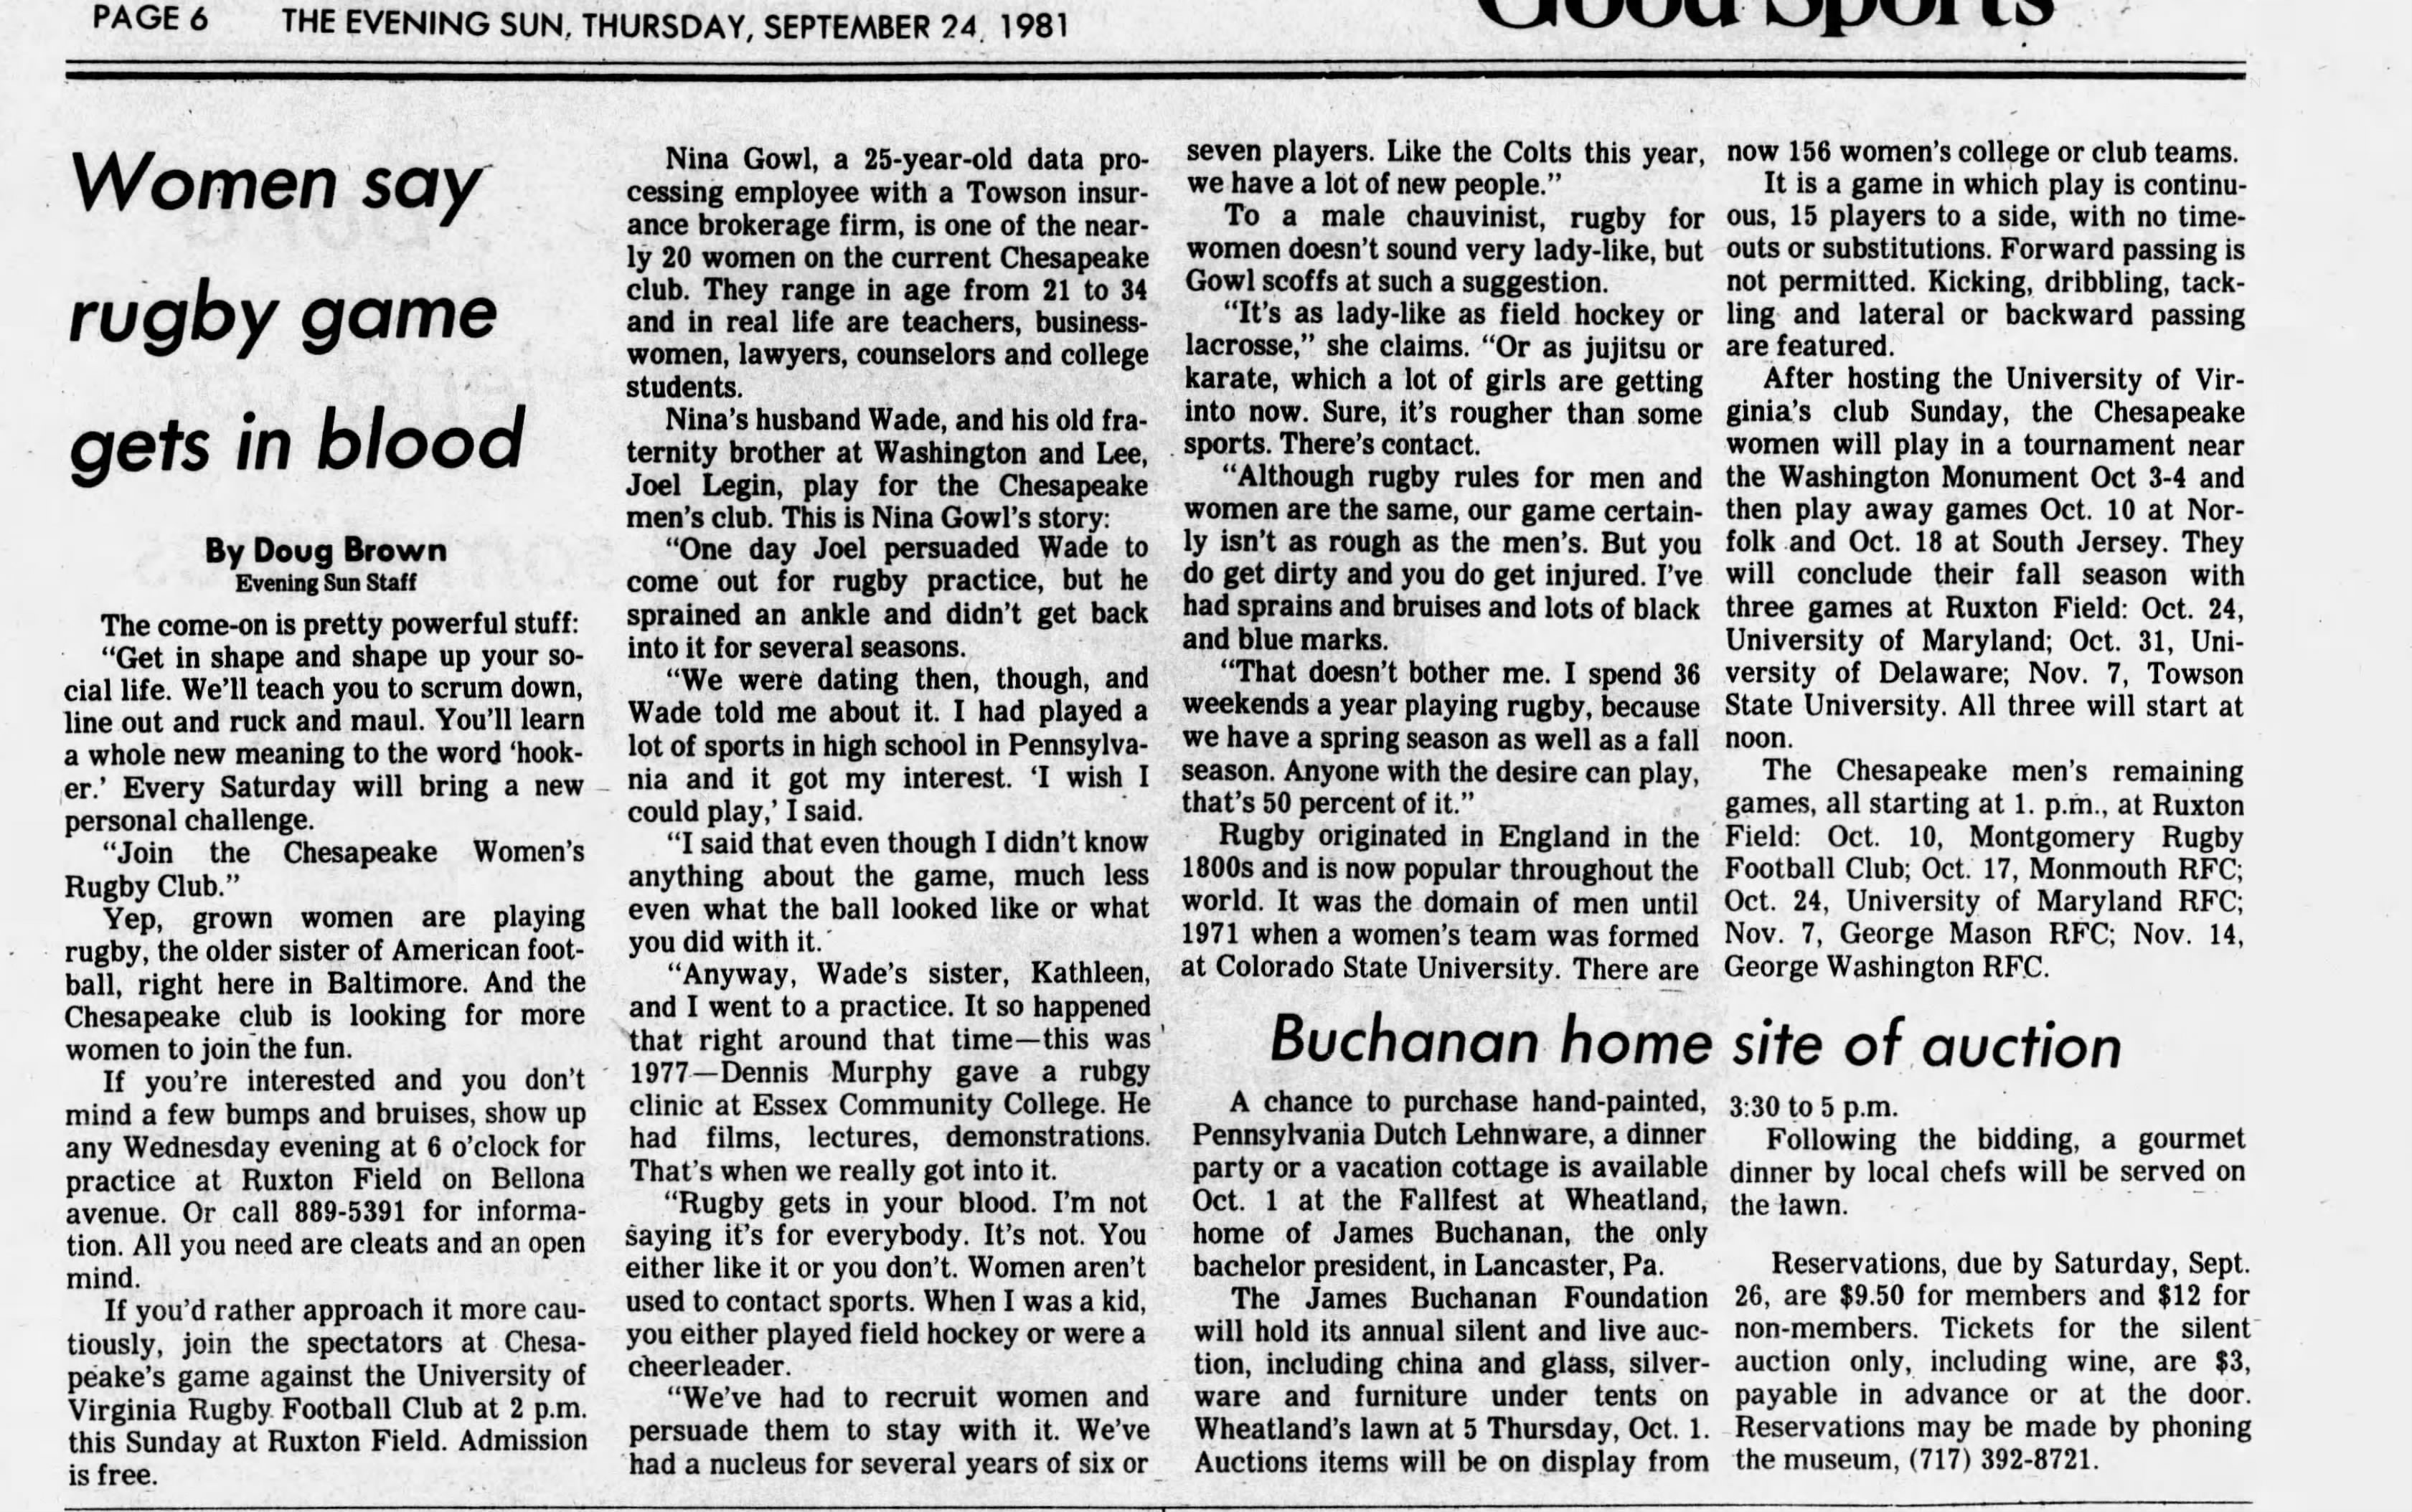 The Evening Sun Thu Sep 24 1981